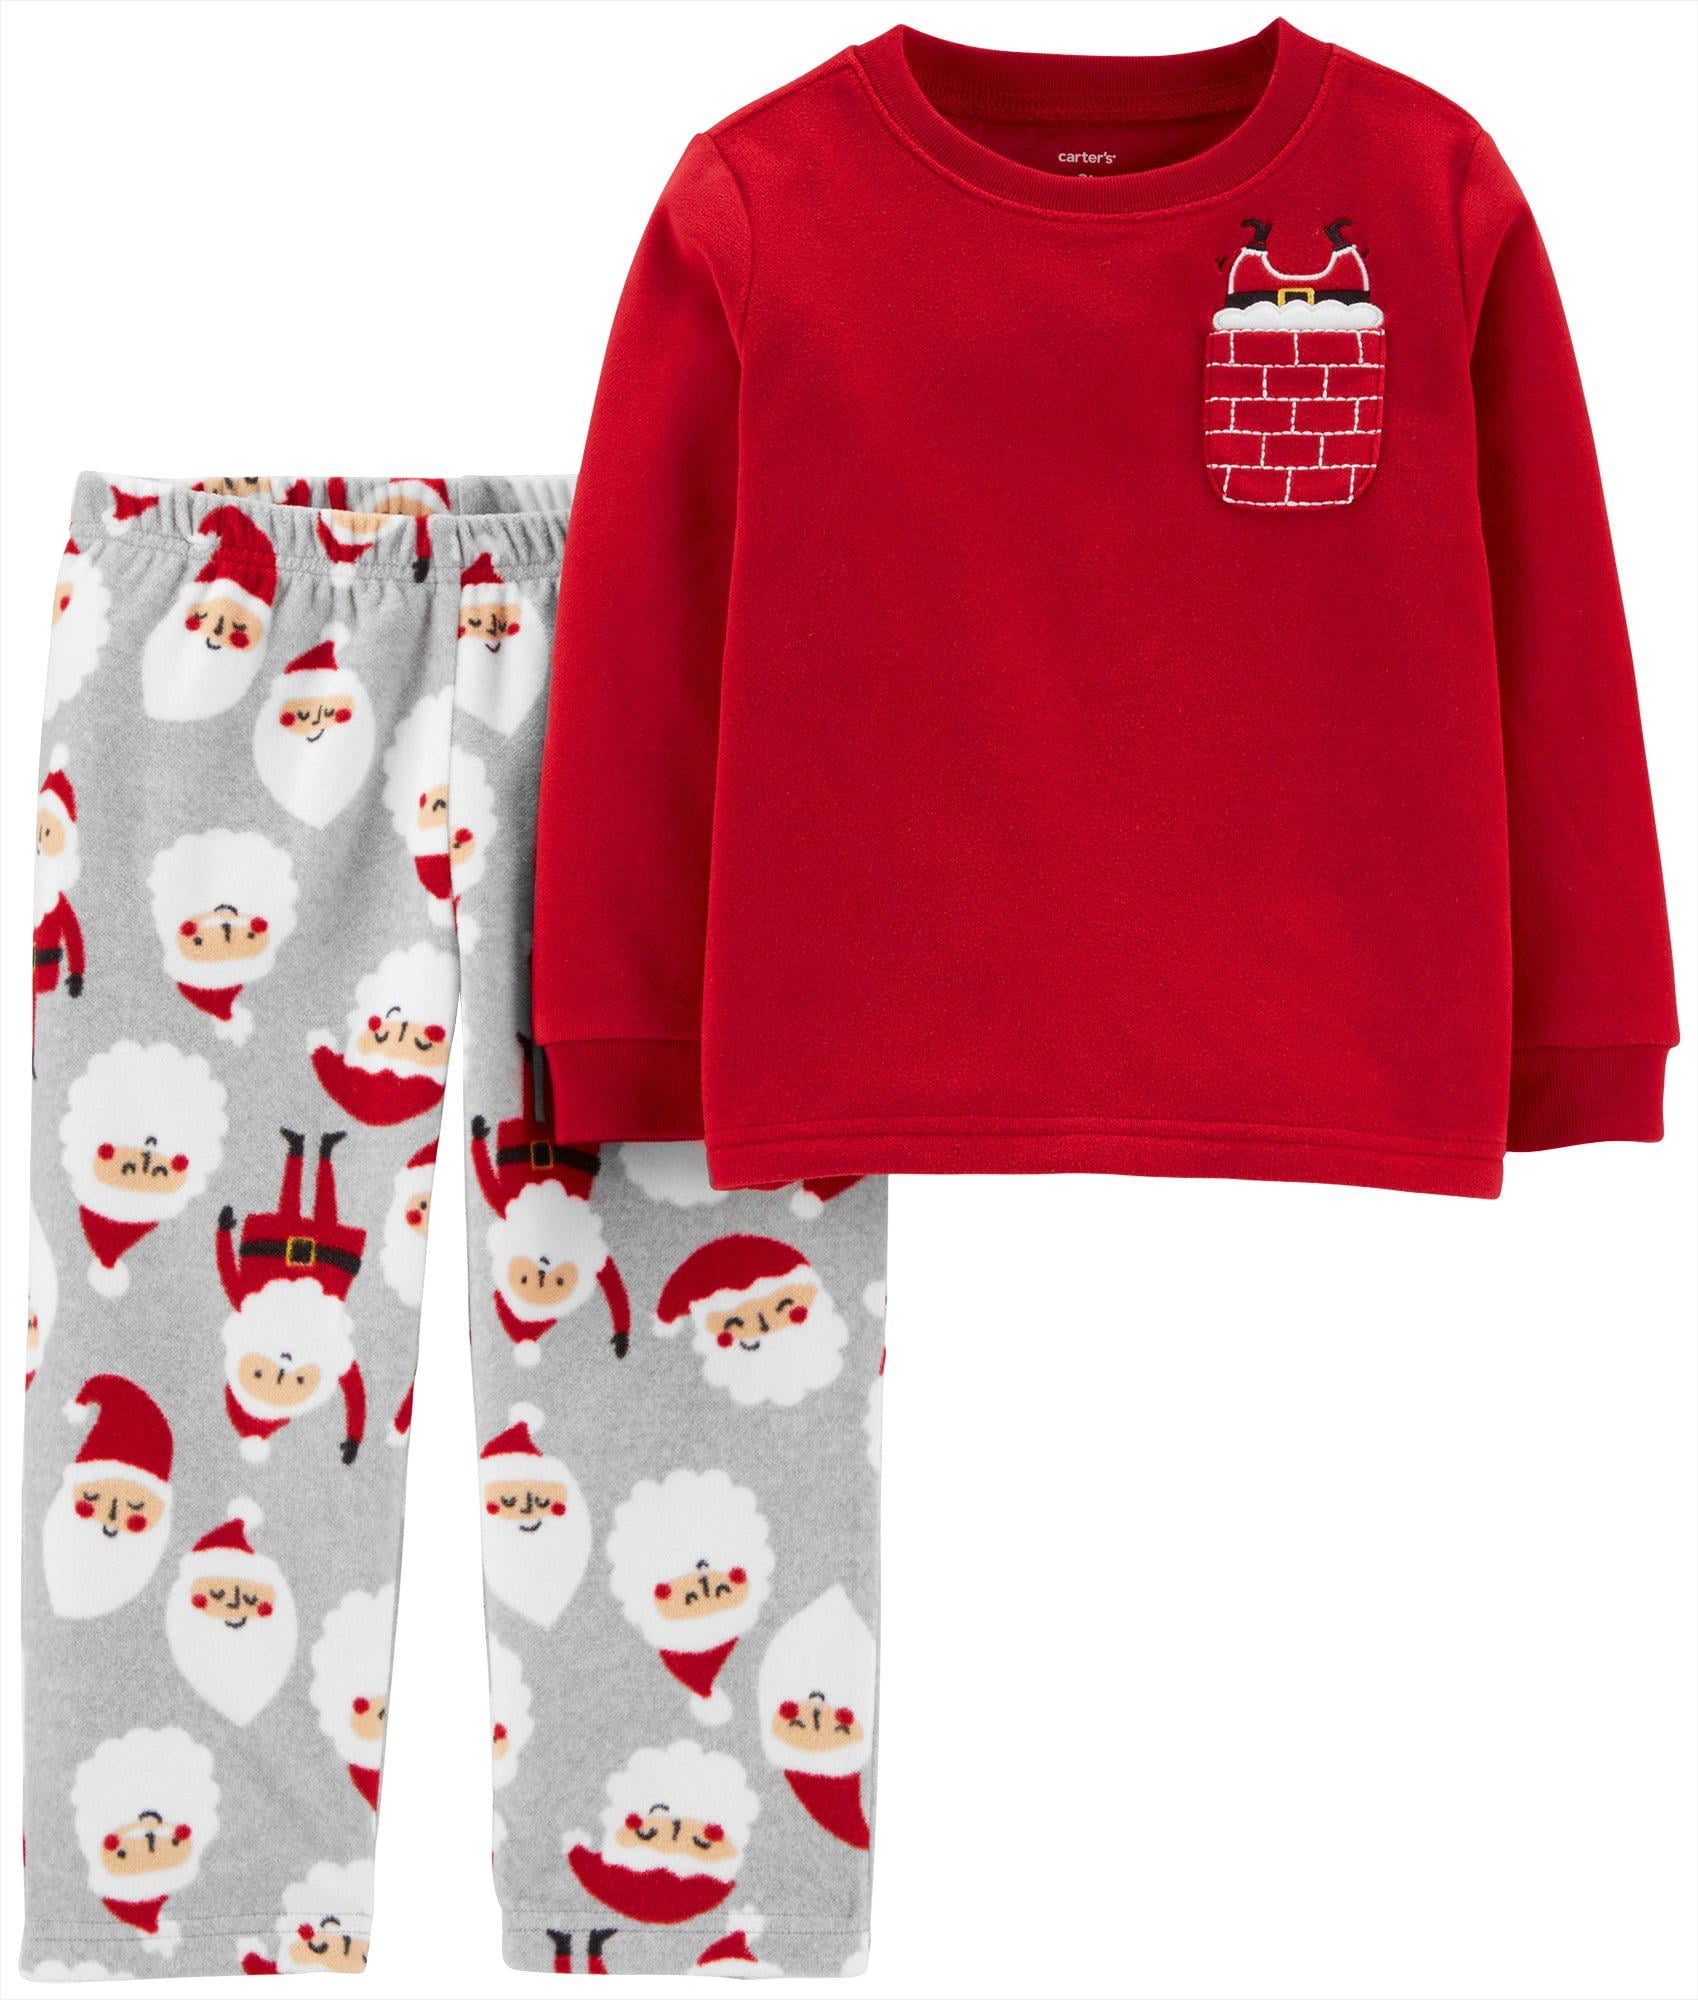 Boy's Sizes 2T,3T,4T  NEW Details about    Carters Santa Jaws Pajama's-Shirt & Fleece Pants 